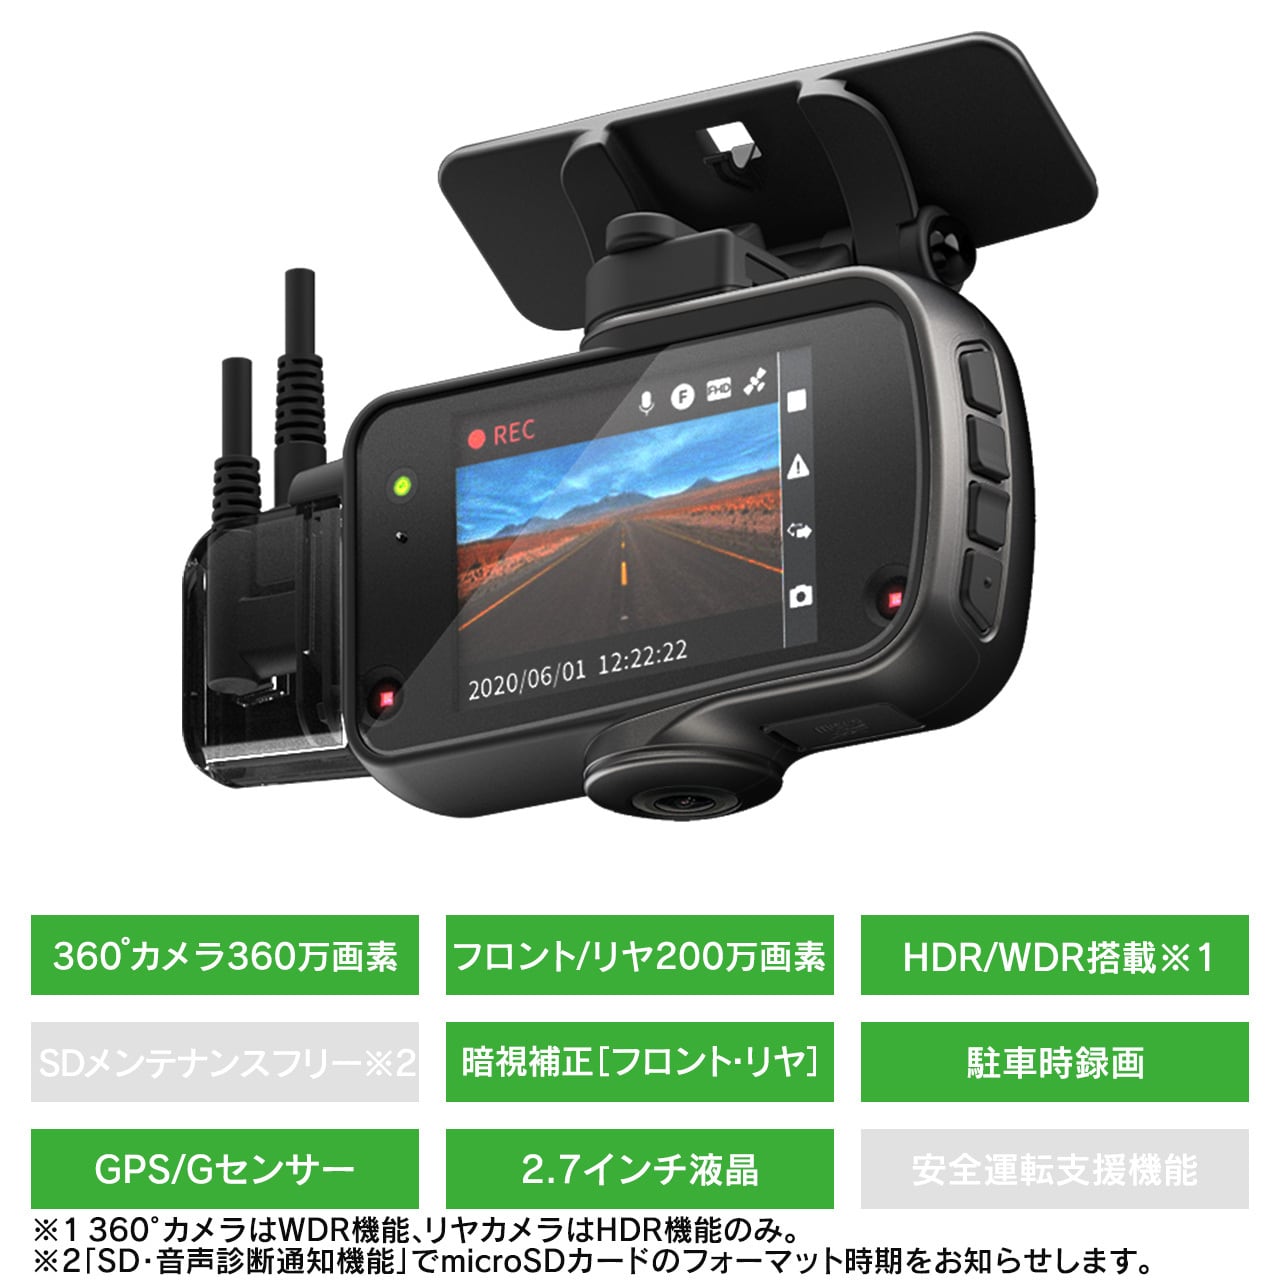 TZ ドライブレコーダー TZ-DR300 本体、リアカメラセット